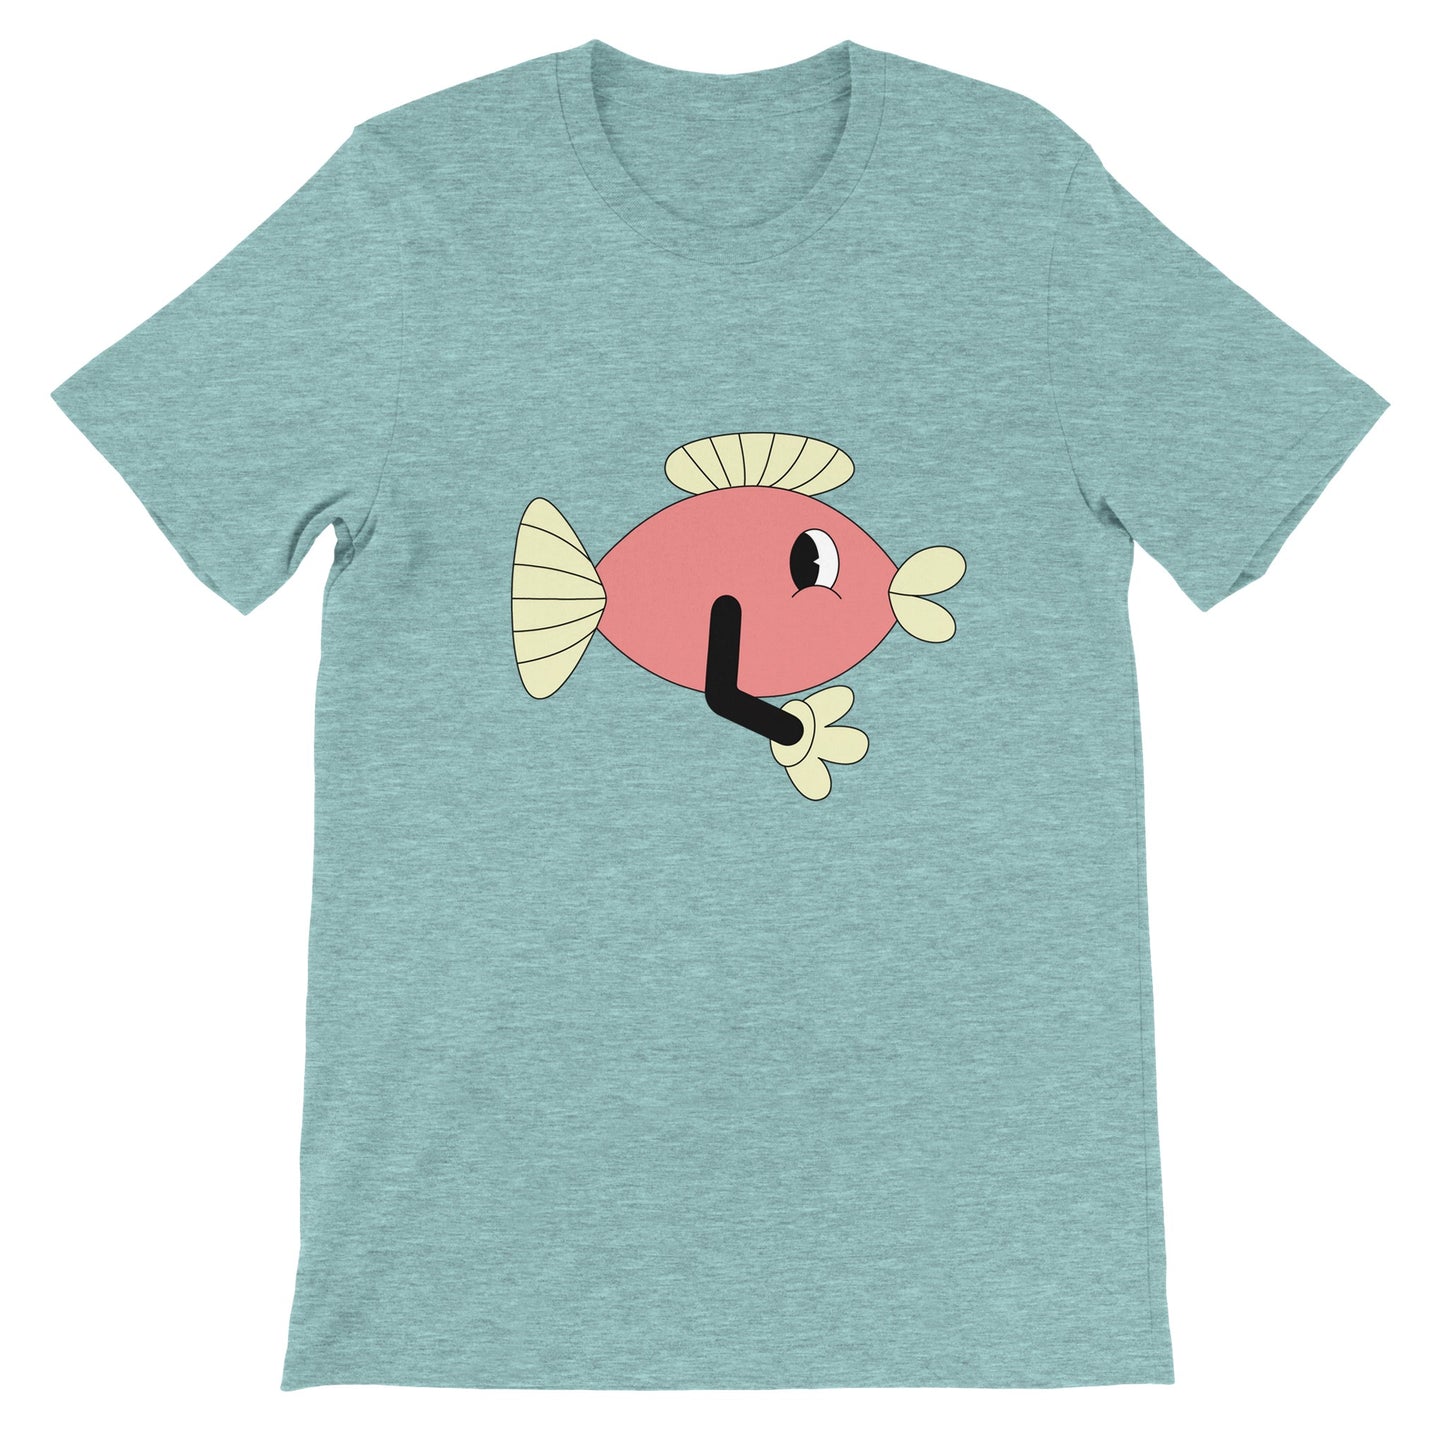 Budget Unisex Crewneck T-shirt/Funny-Fish